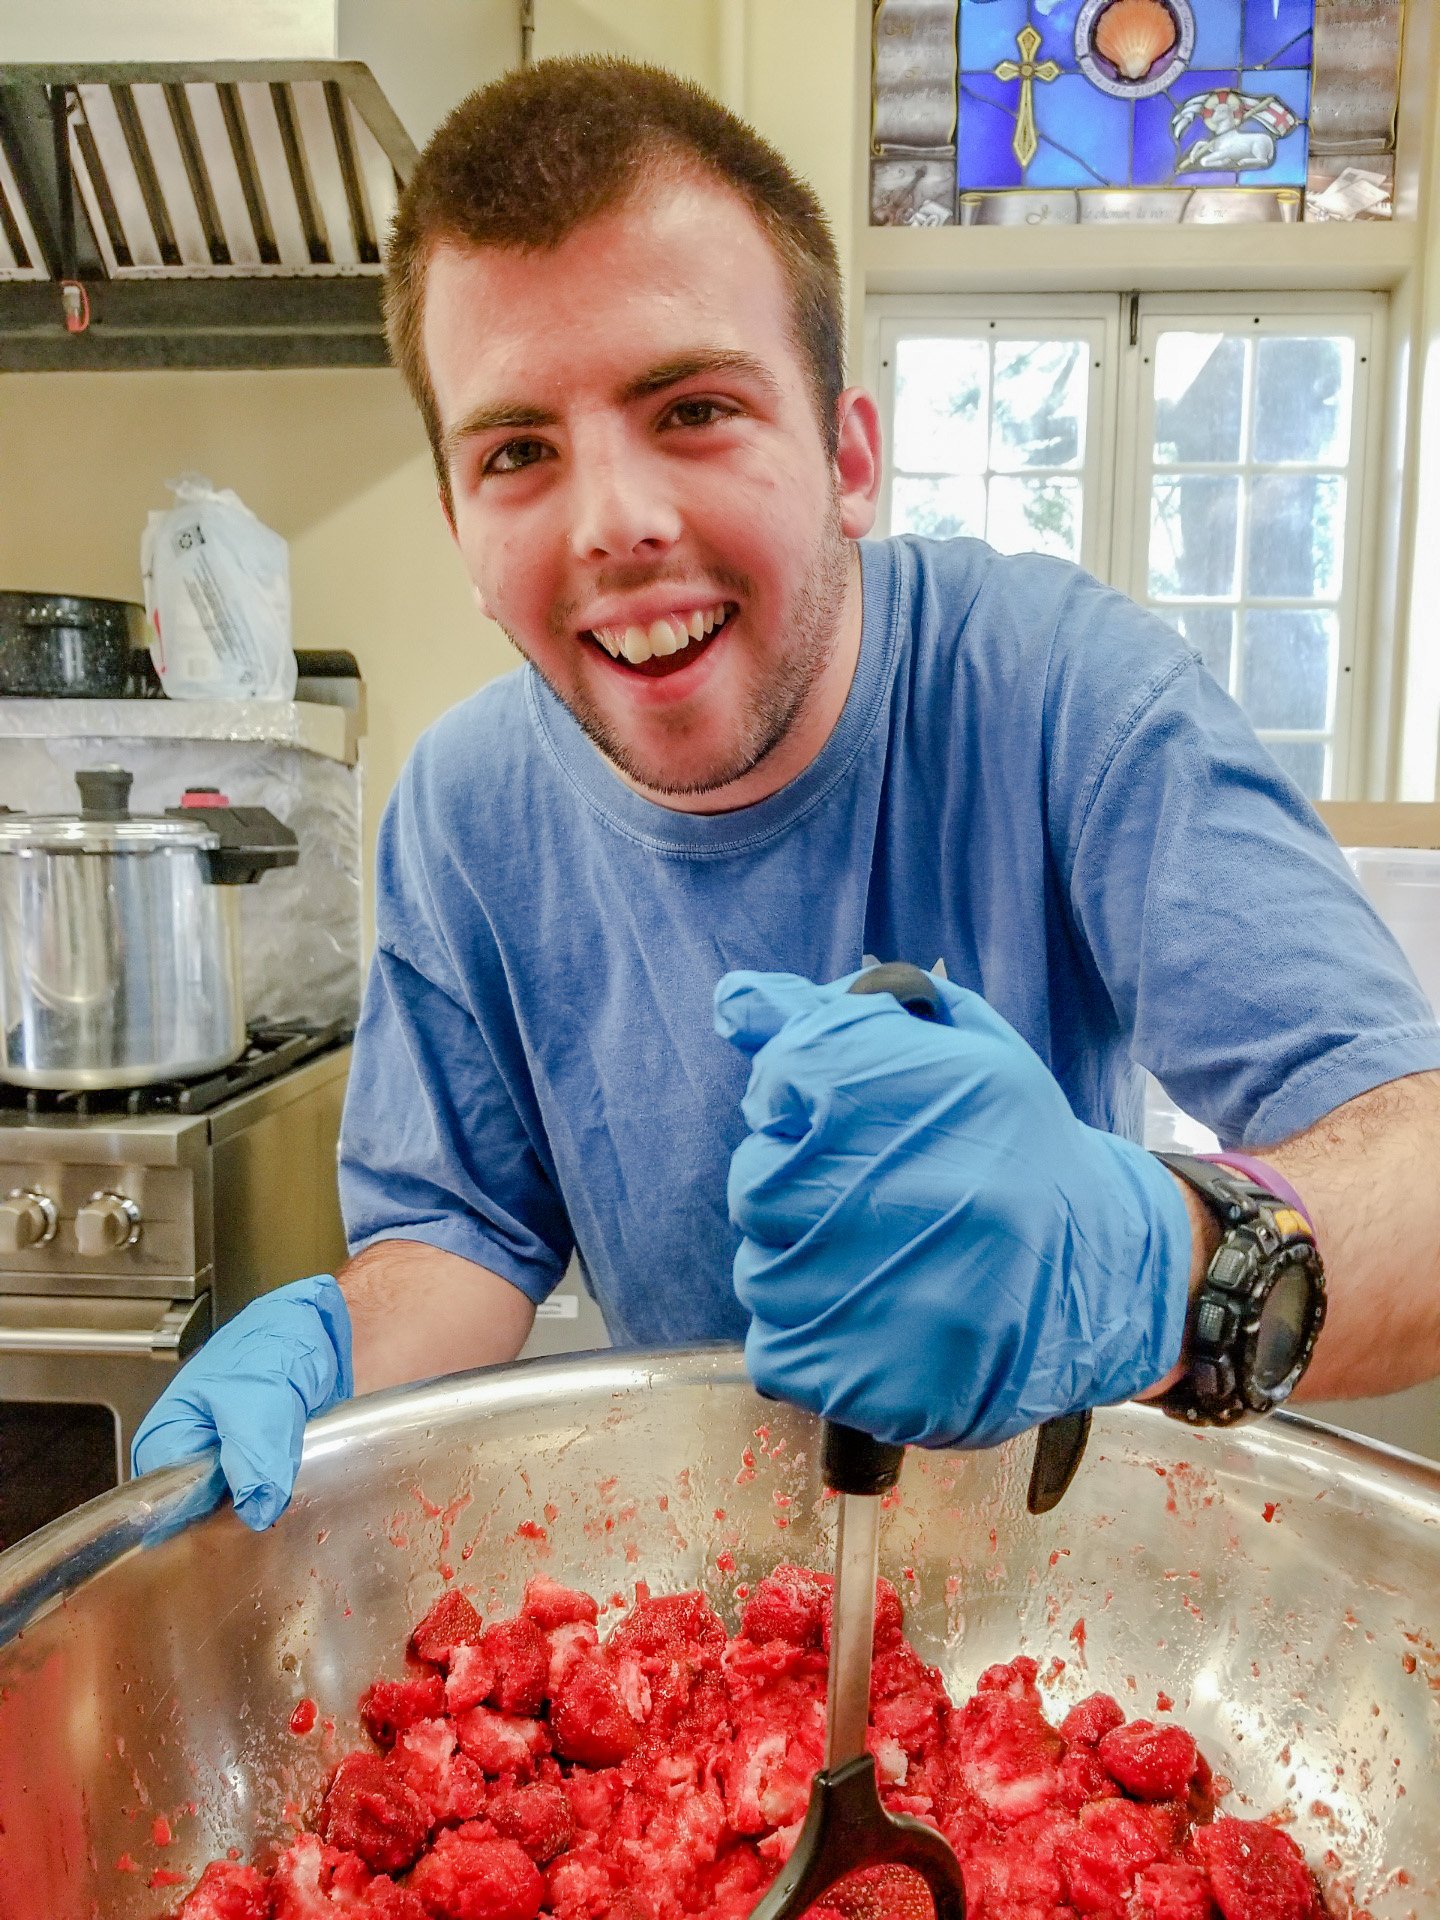 Grower Casie mashing strawberries for making jam.JPG